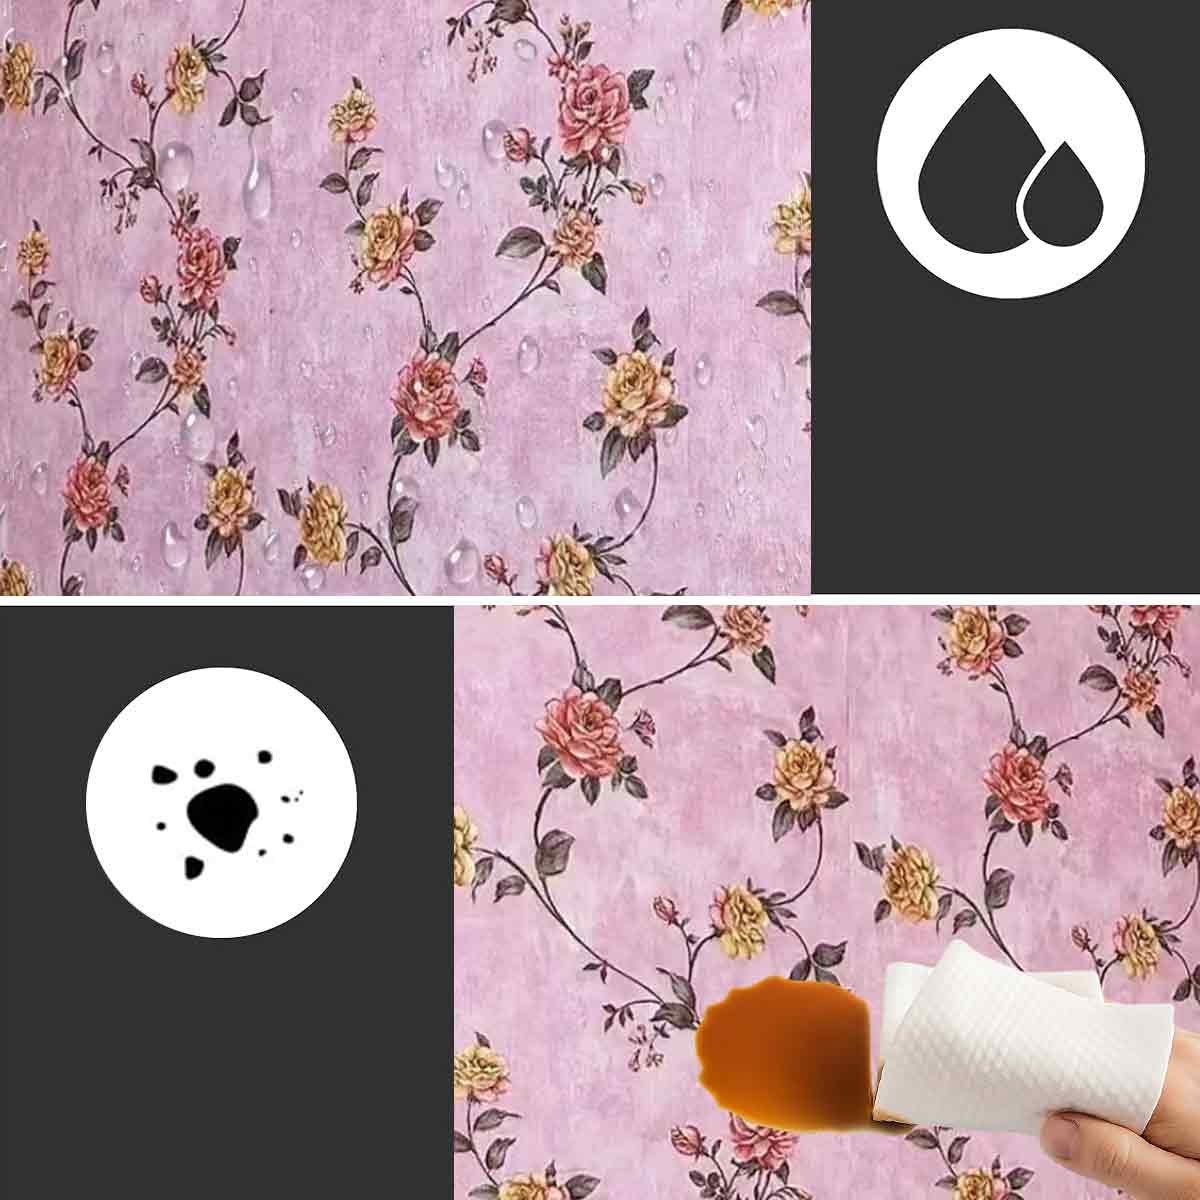 Haus Fototapete Series Pattern Tapete,selbstklebende Floral Jormftte Rosa Tapete,für Deko